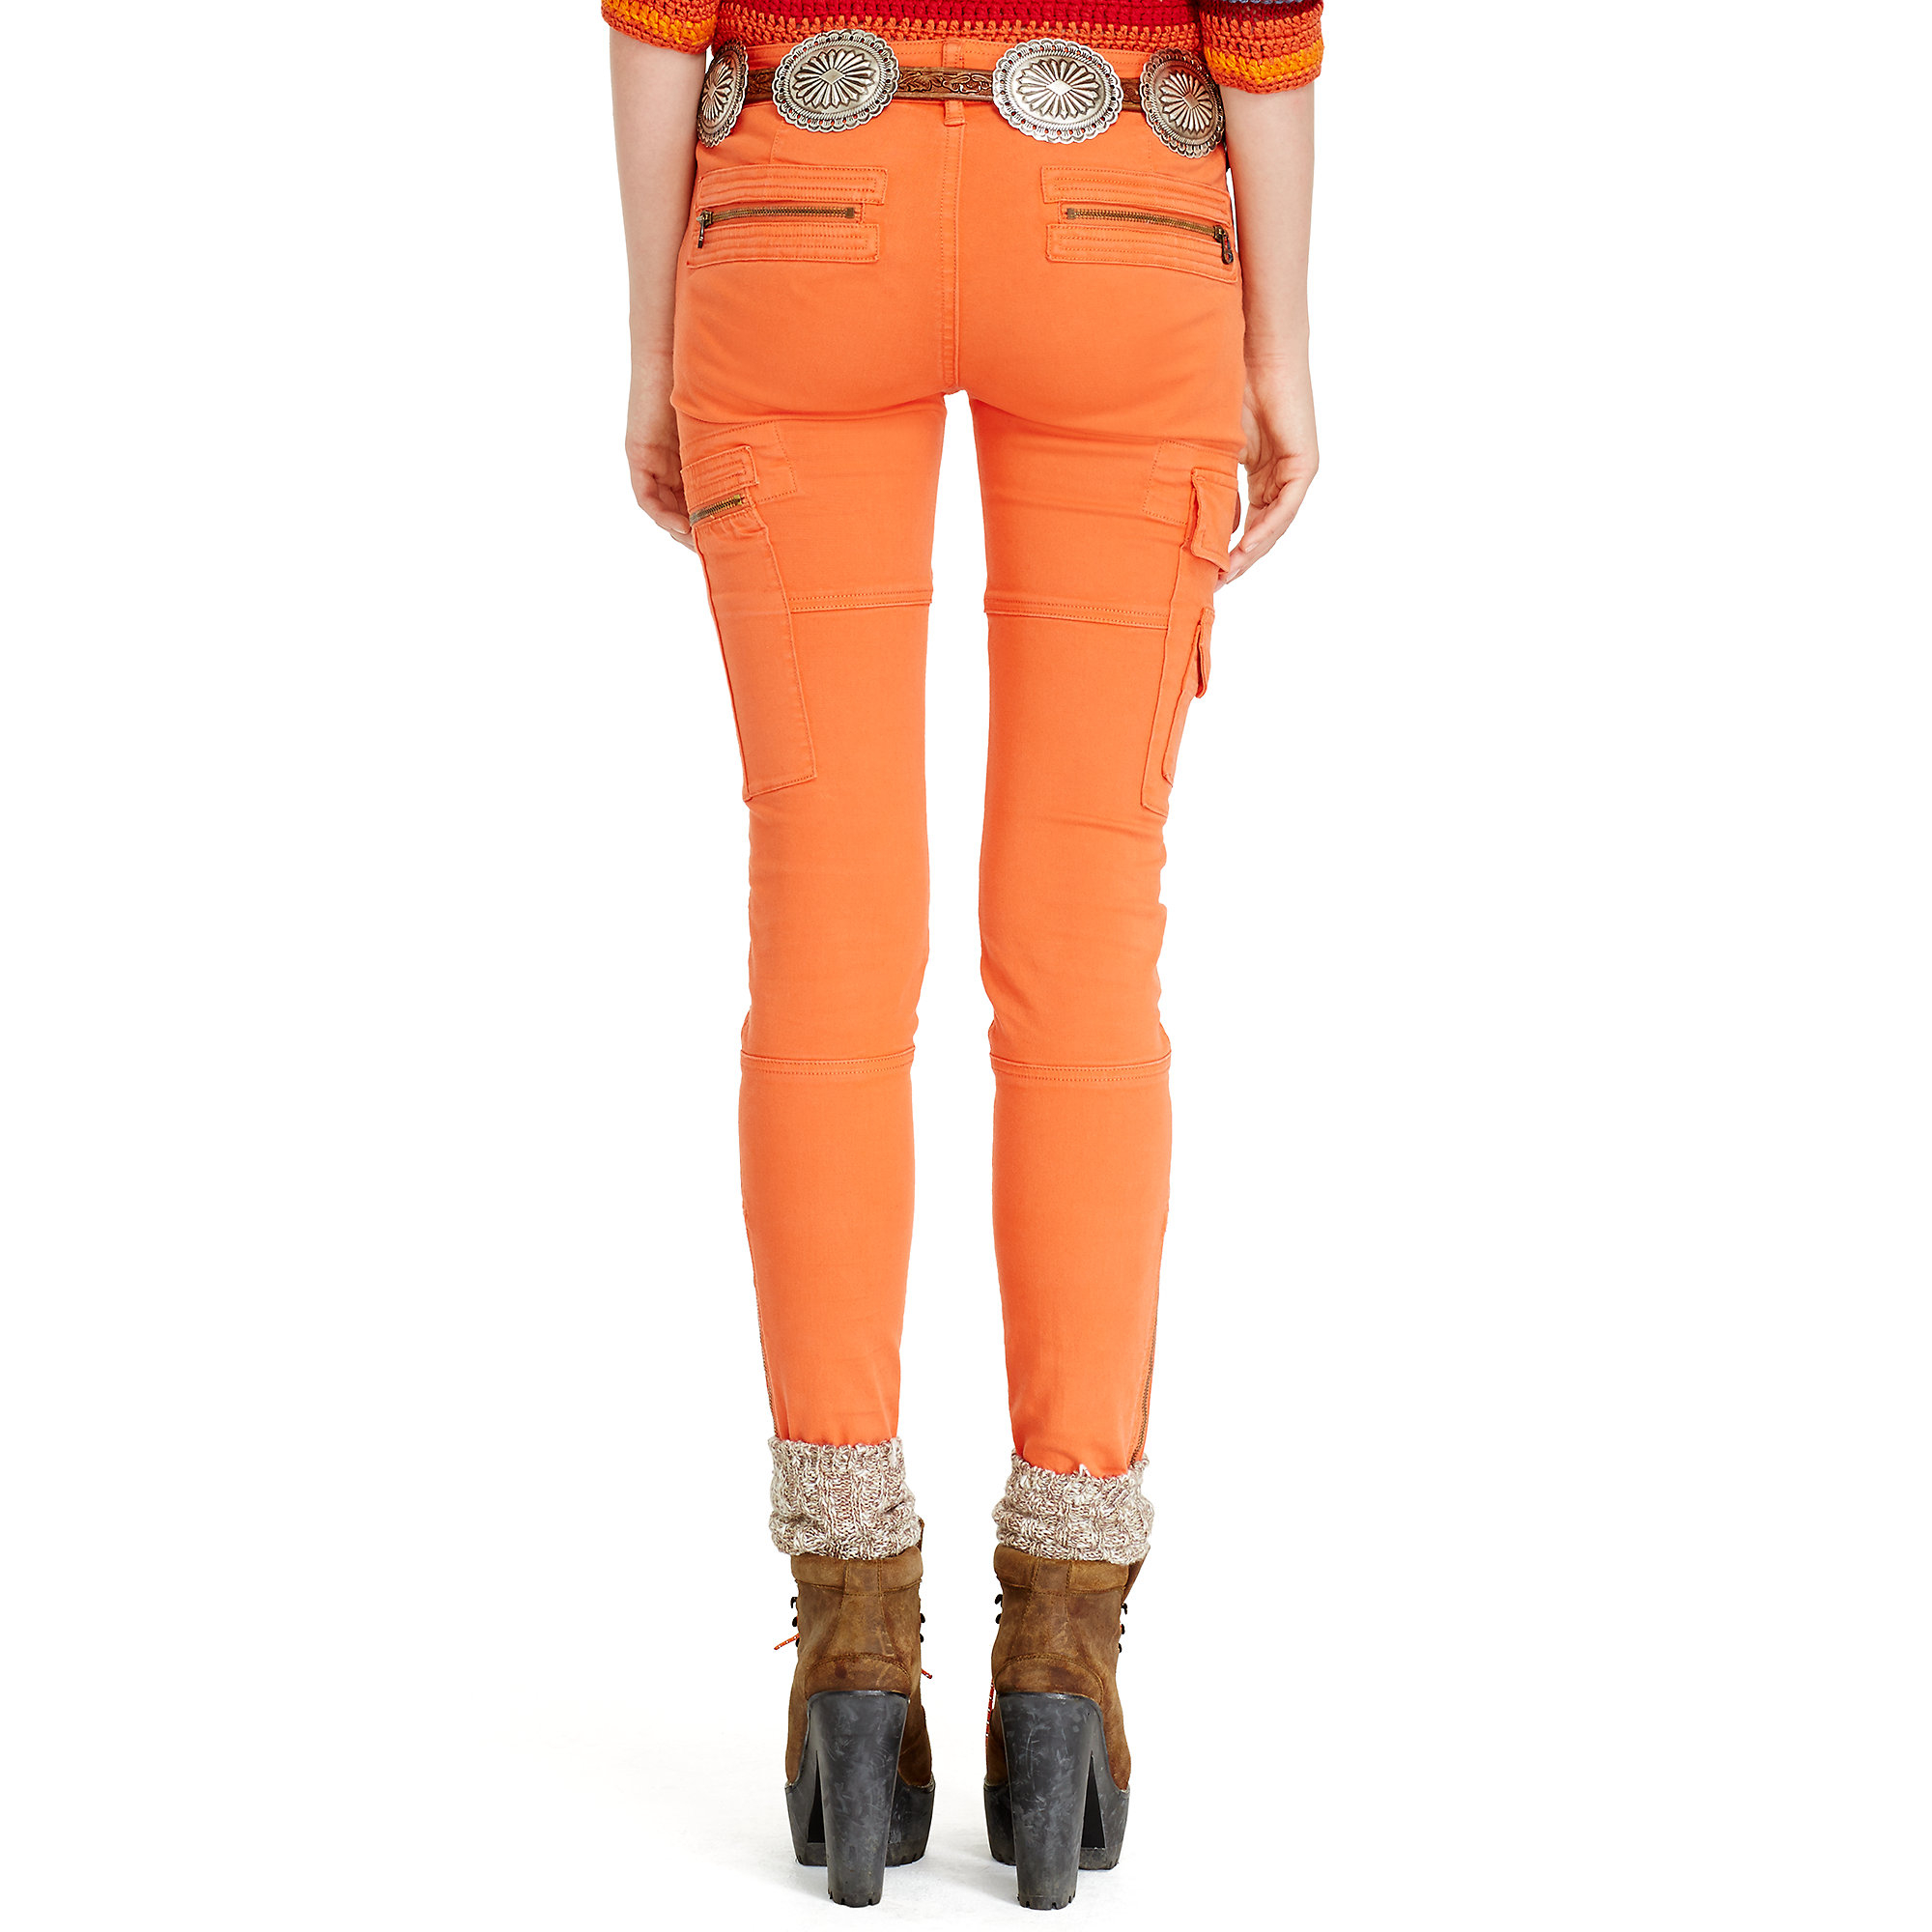 Lyst - Polo Ralph Lauren Stretch Skinny Cargo Pant in Orange